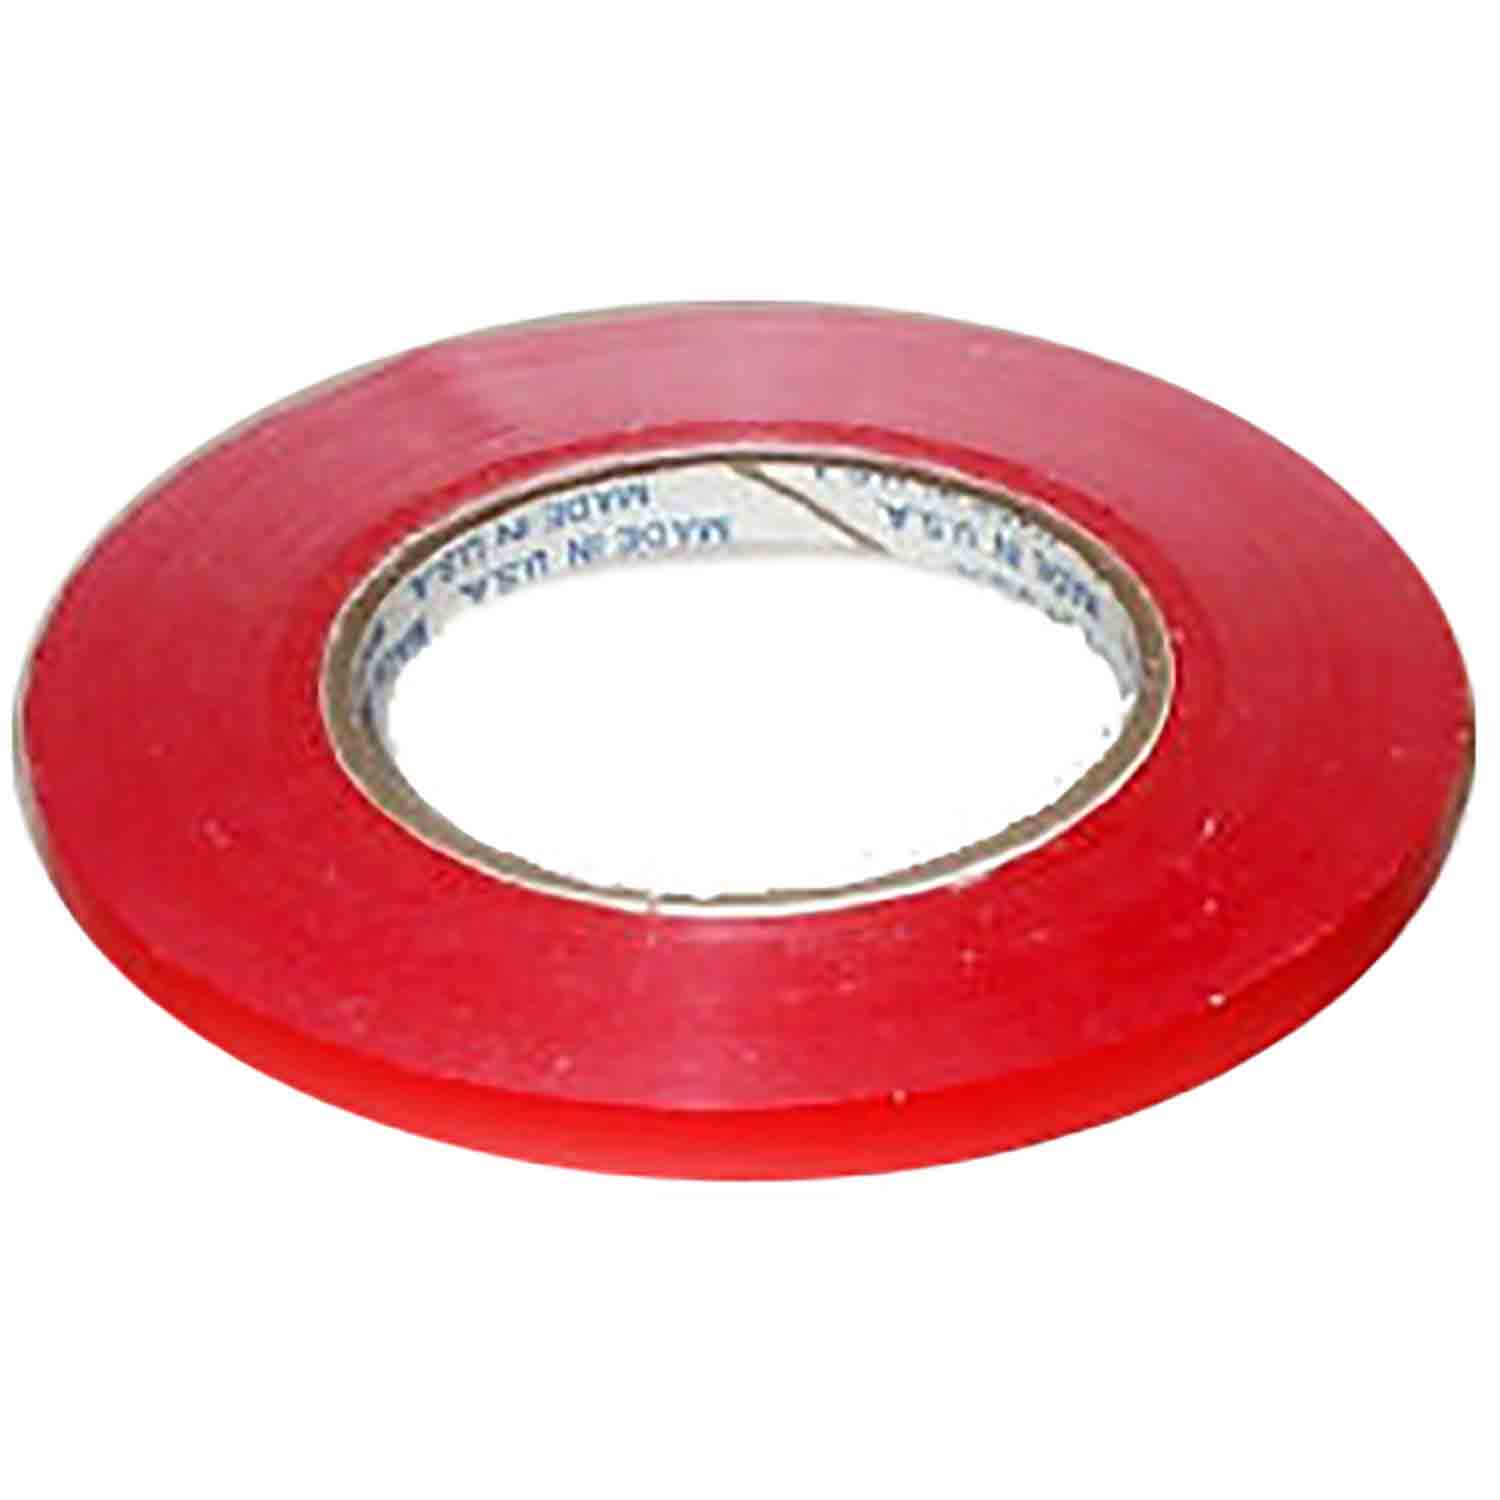 Bag Sealer Replacement Tape - Red